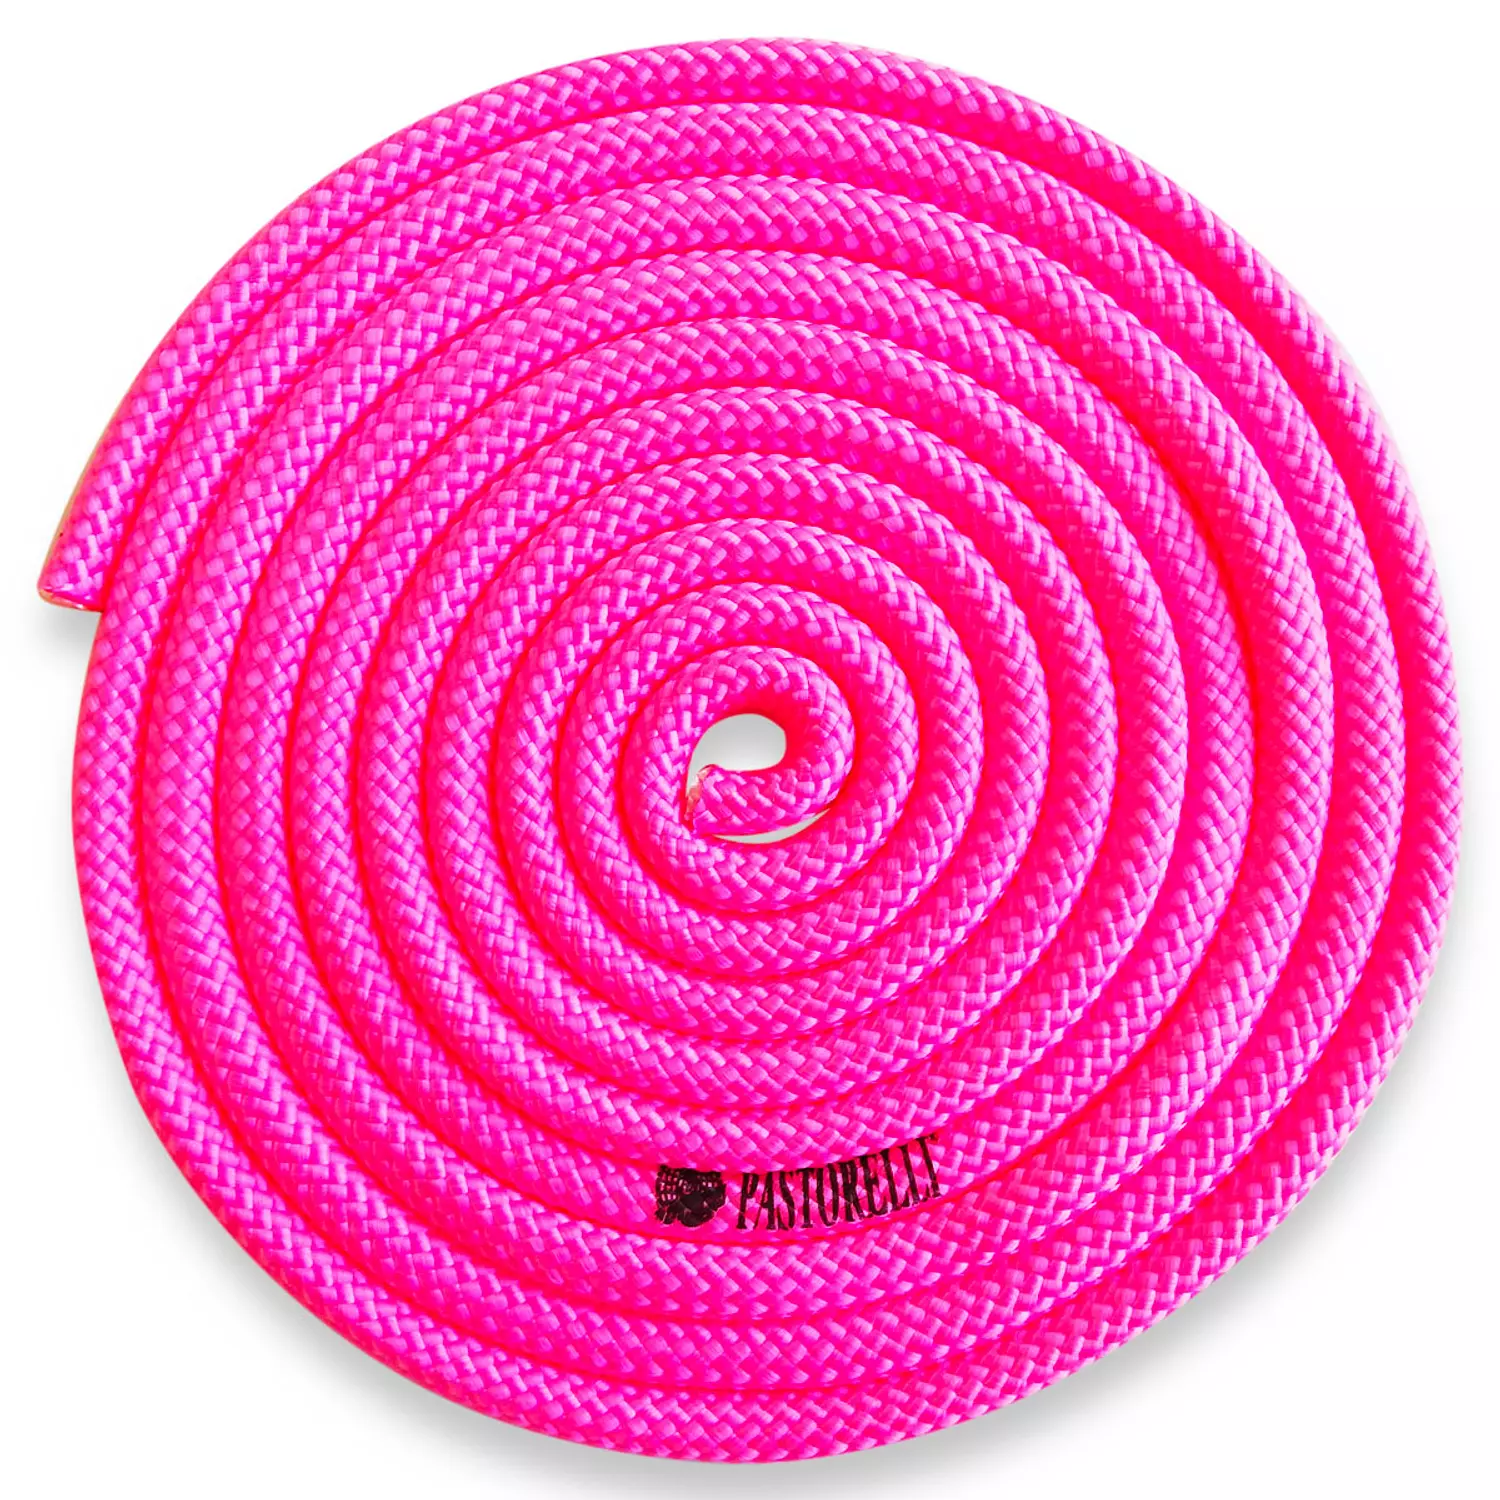 Pastorelli-New Orleans monochromatic rope FIG 3m 3